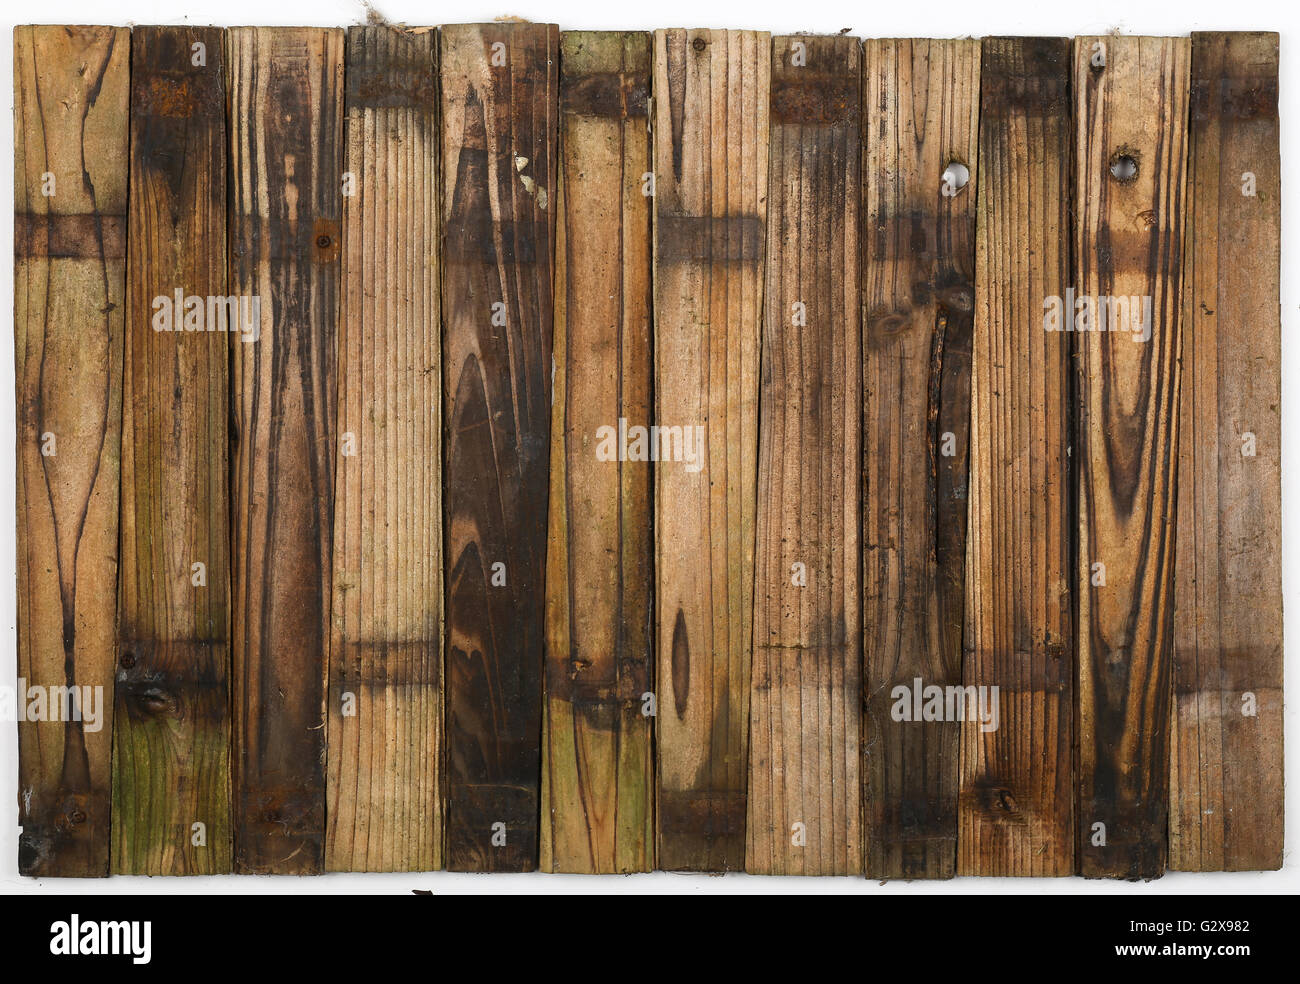 Wooden half barrel garden planter planks texture or background Stock Photo